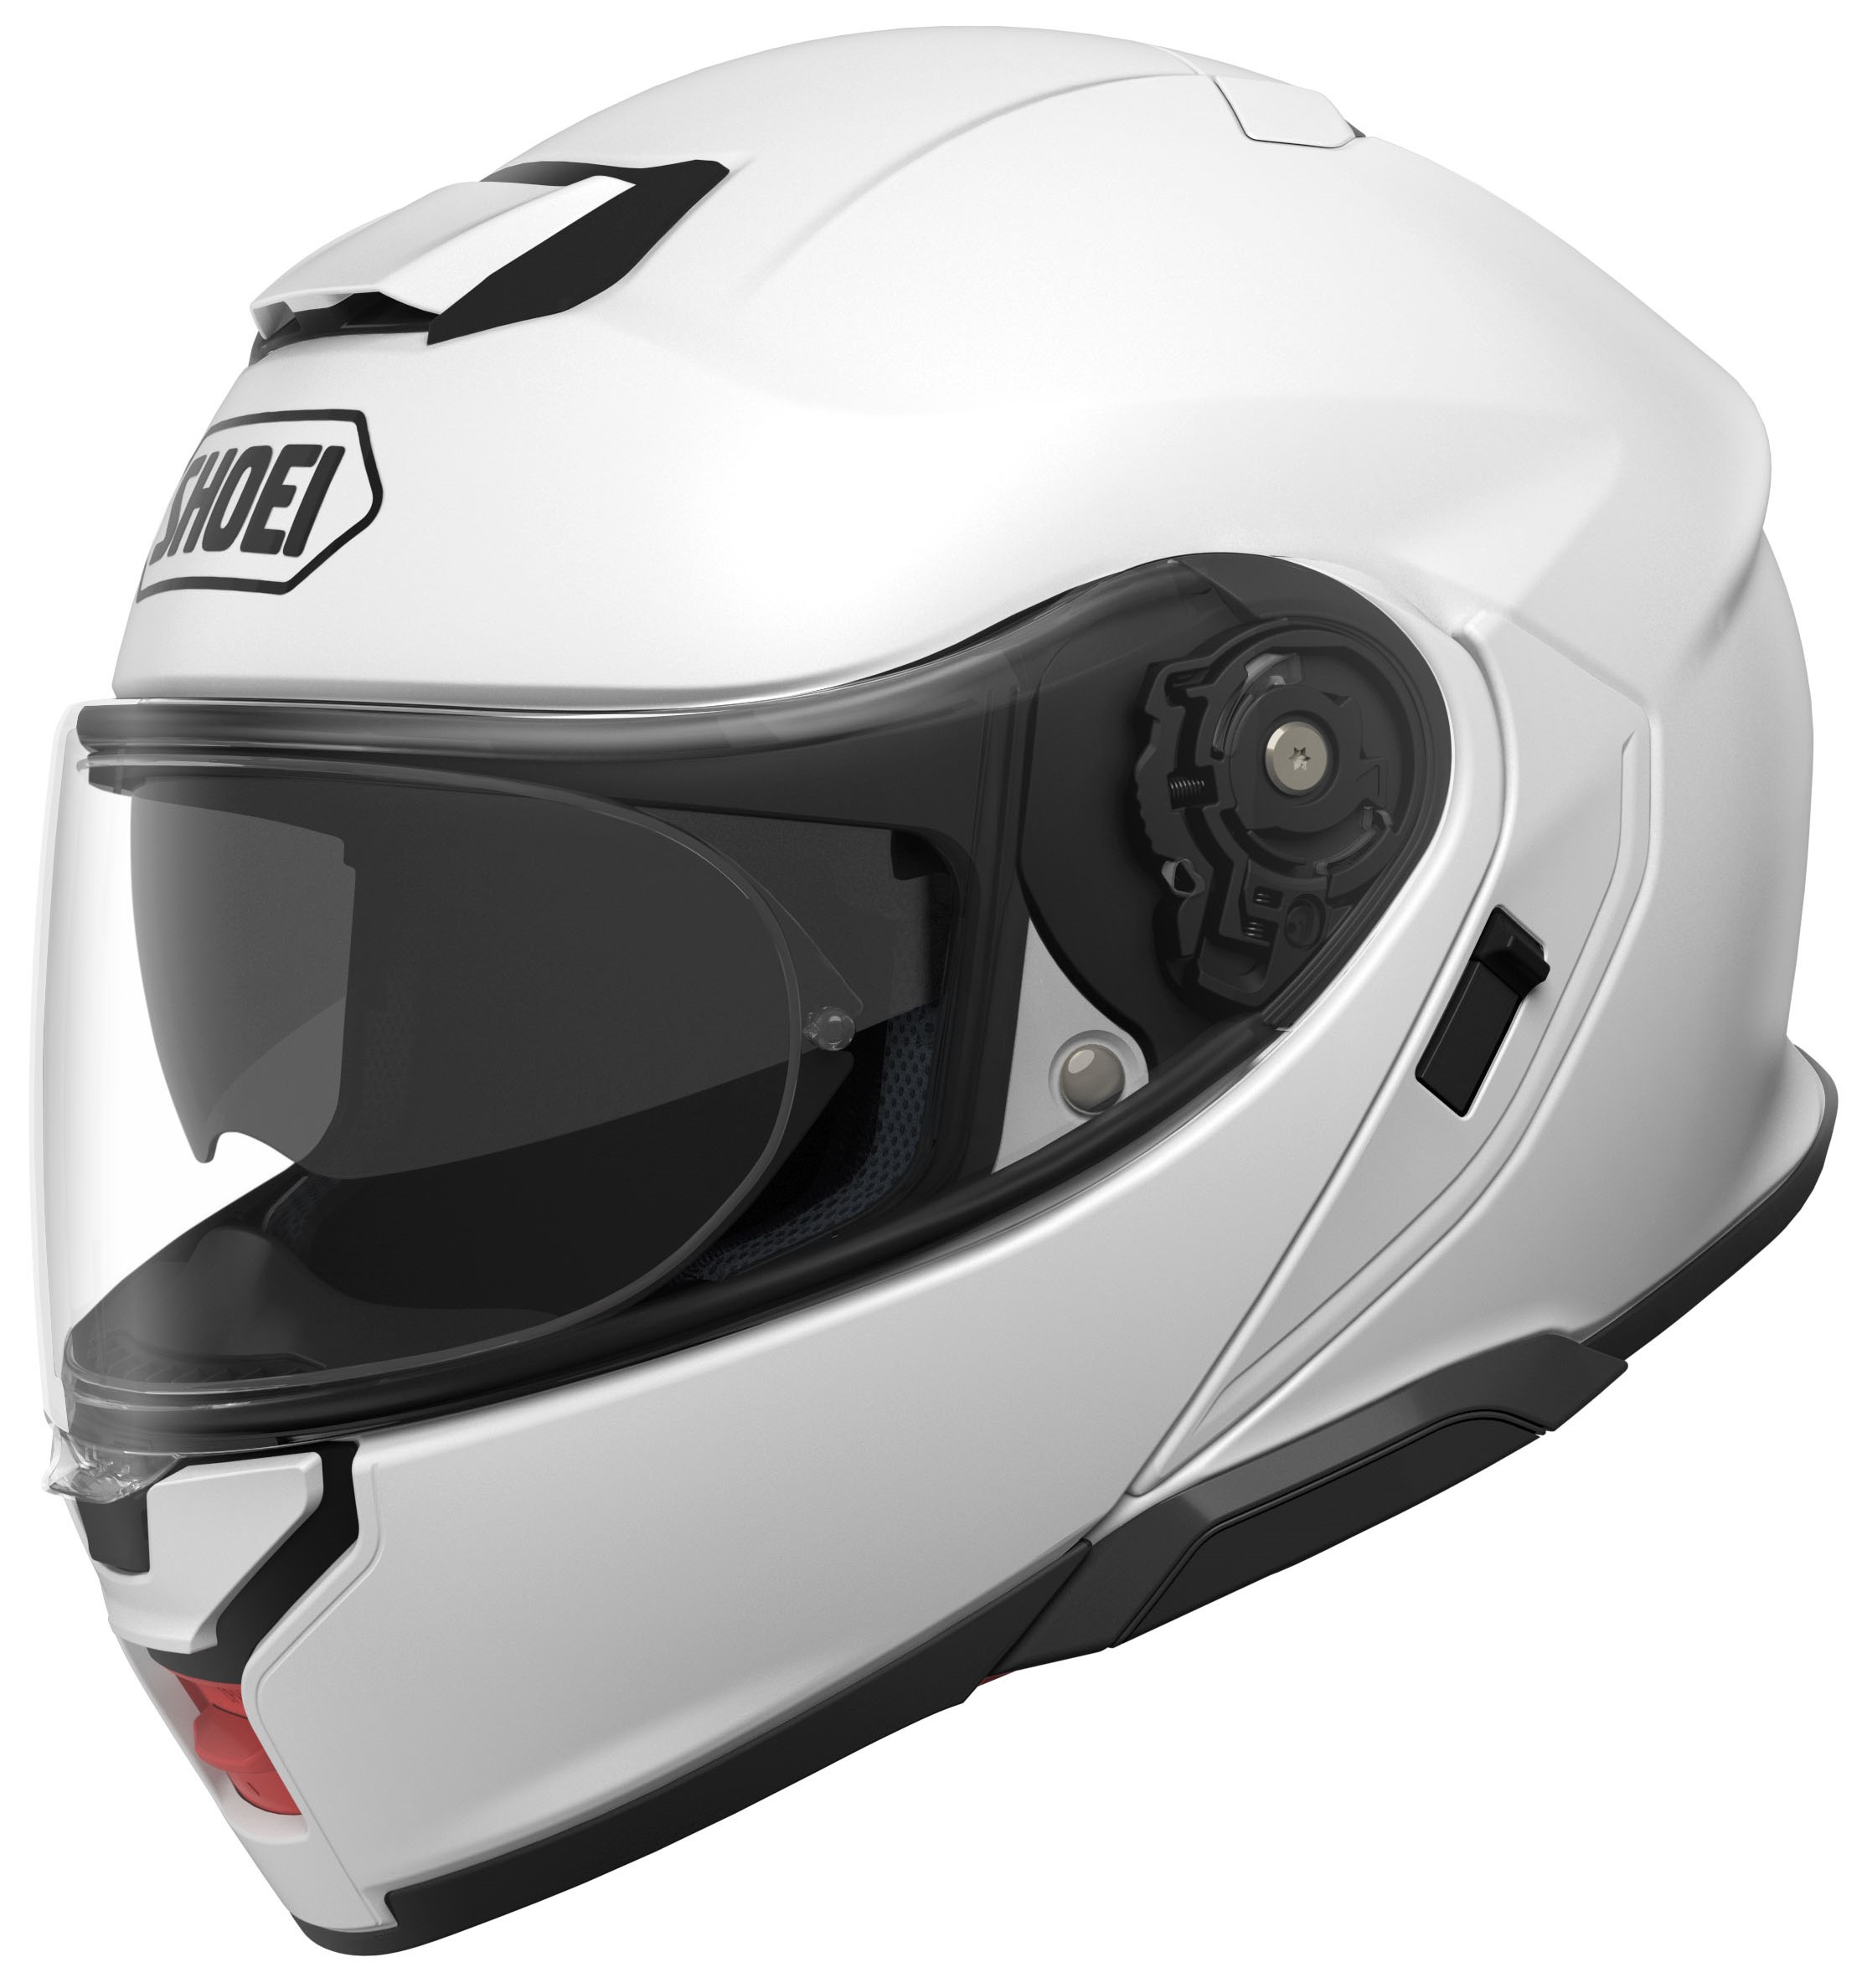 Shoei Neotec 3 White Helmet Motorcycle Helmet Warehouse Australia Wide